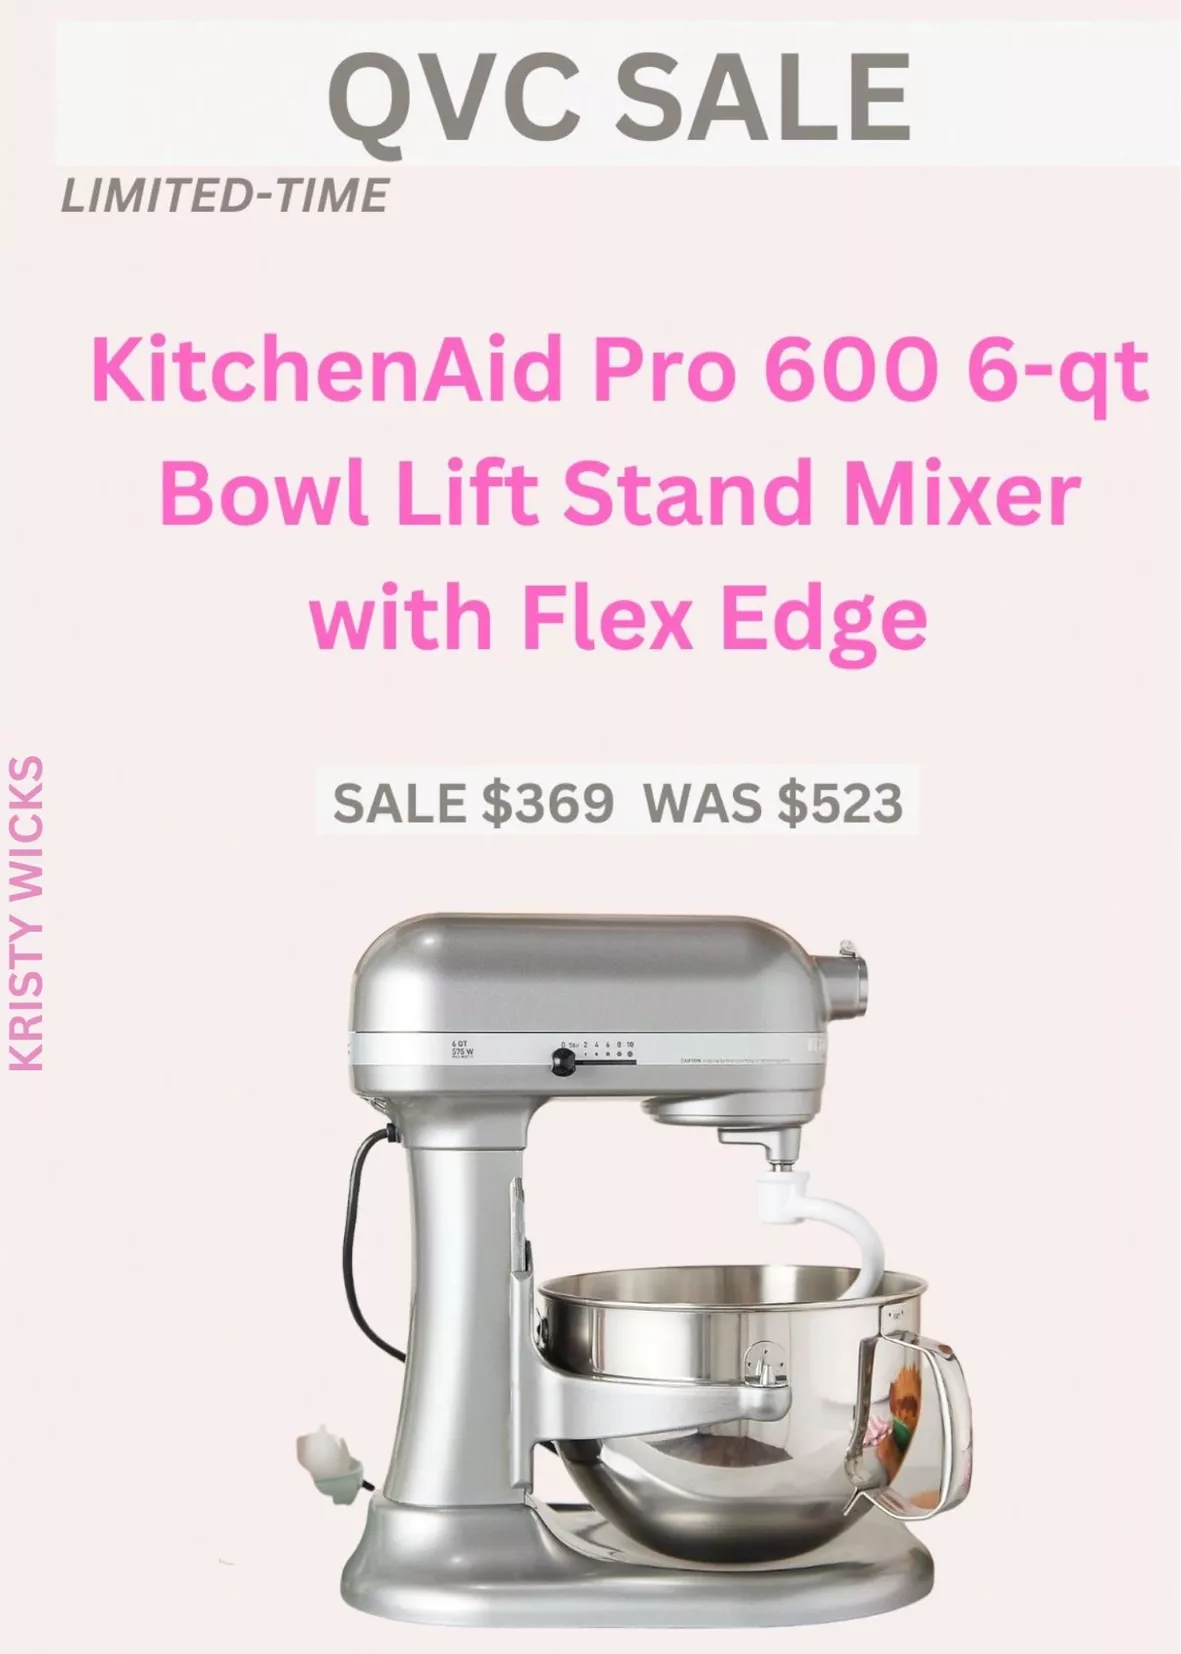 KitchenAid Pro 600 6-qt Bowl Lift Stand Mixer with Flex Edge and